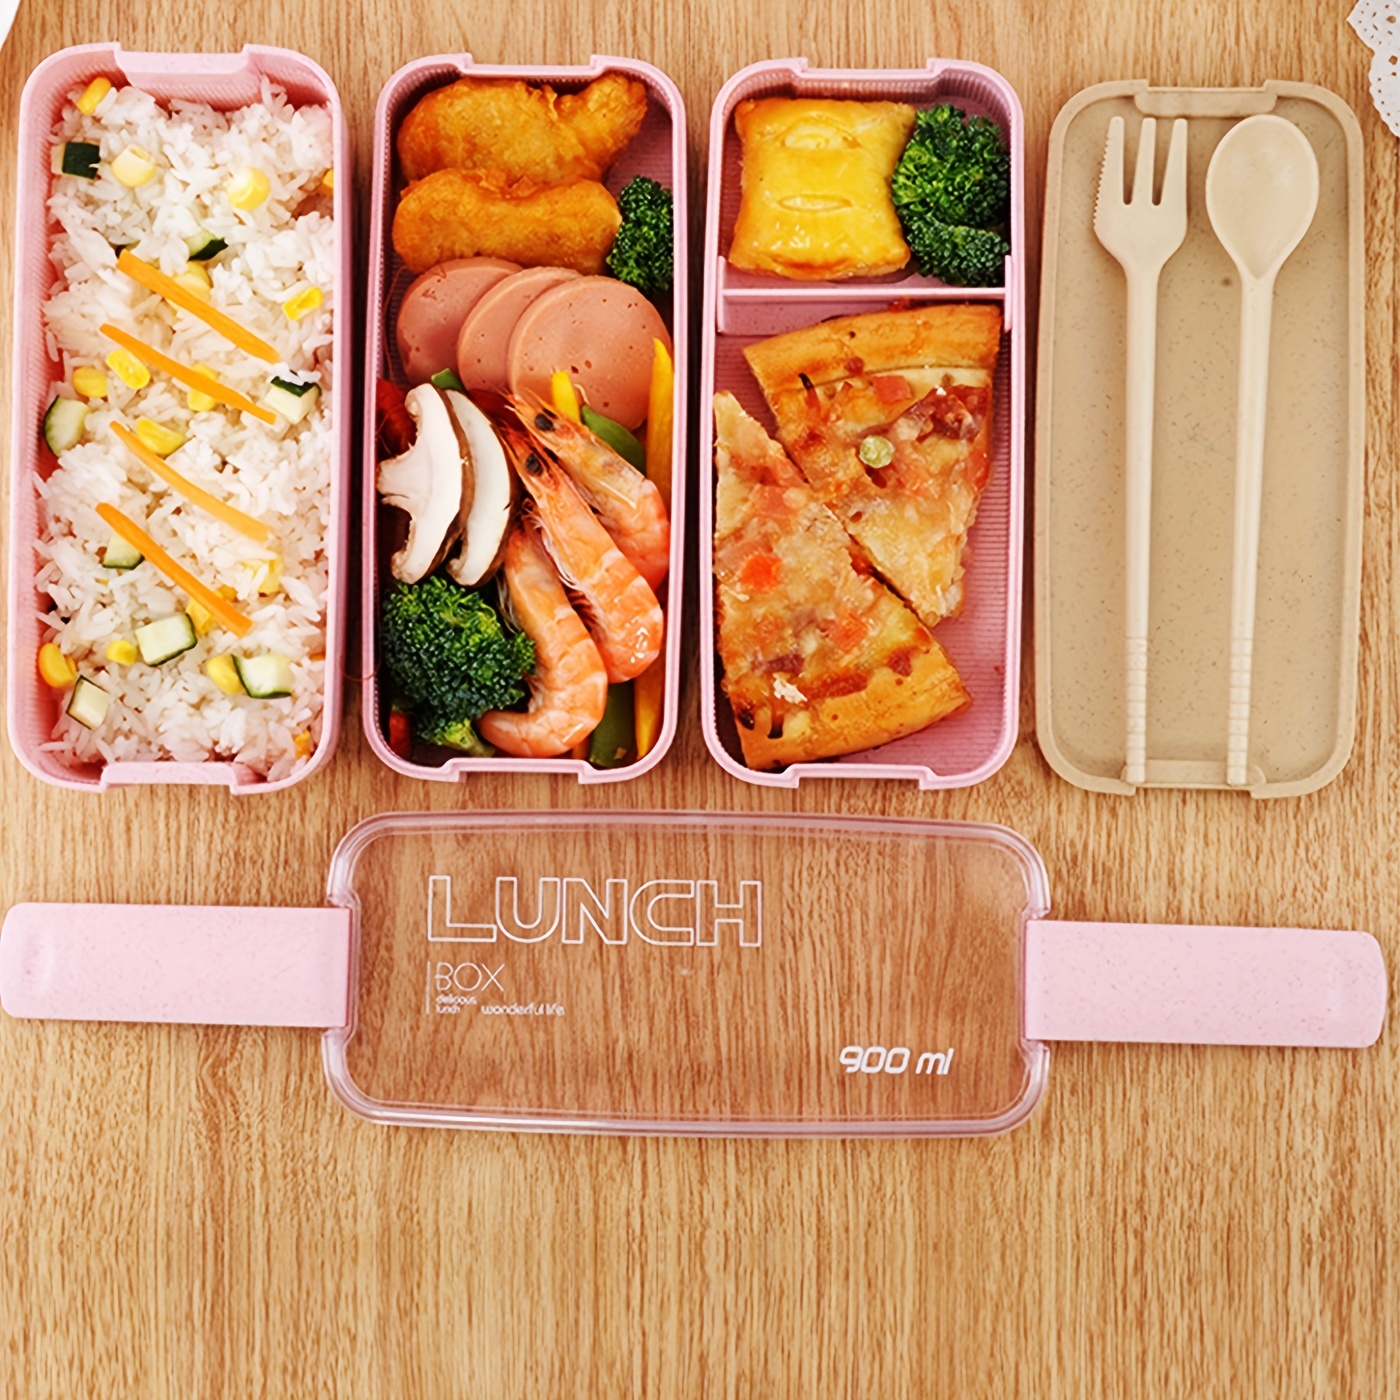  XIANKE 27Pcs Bento Box Lunch Box Kit, 1300ML Lunch